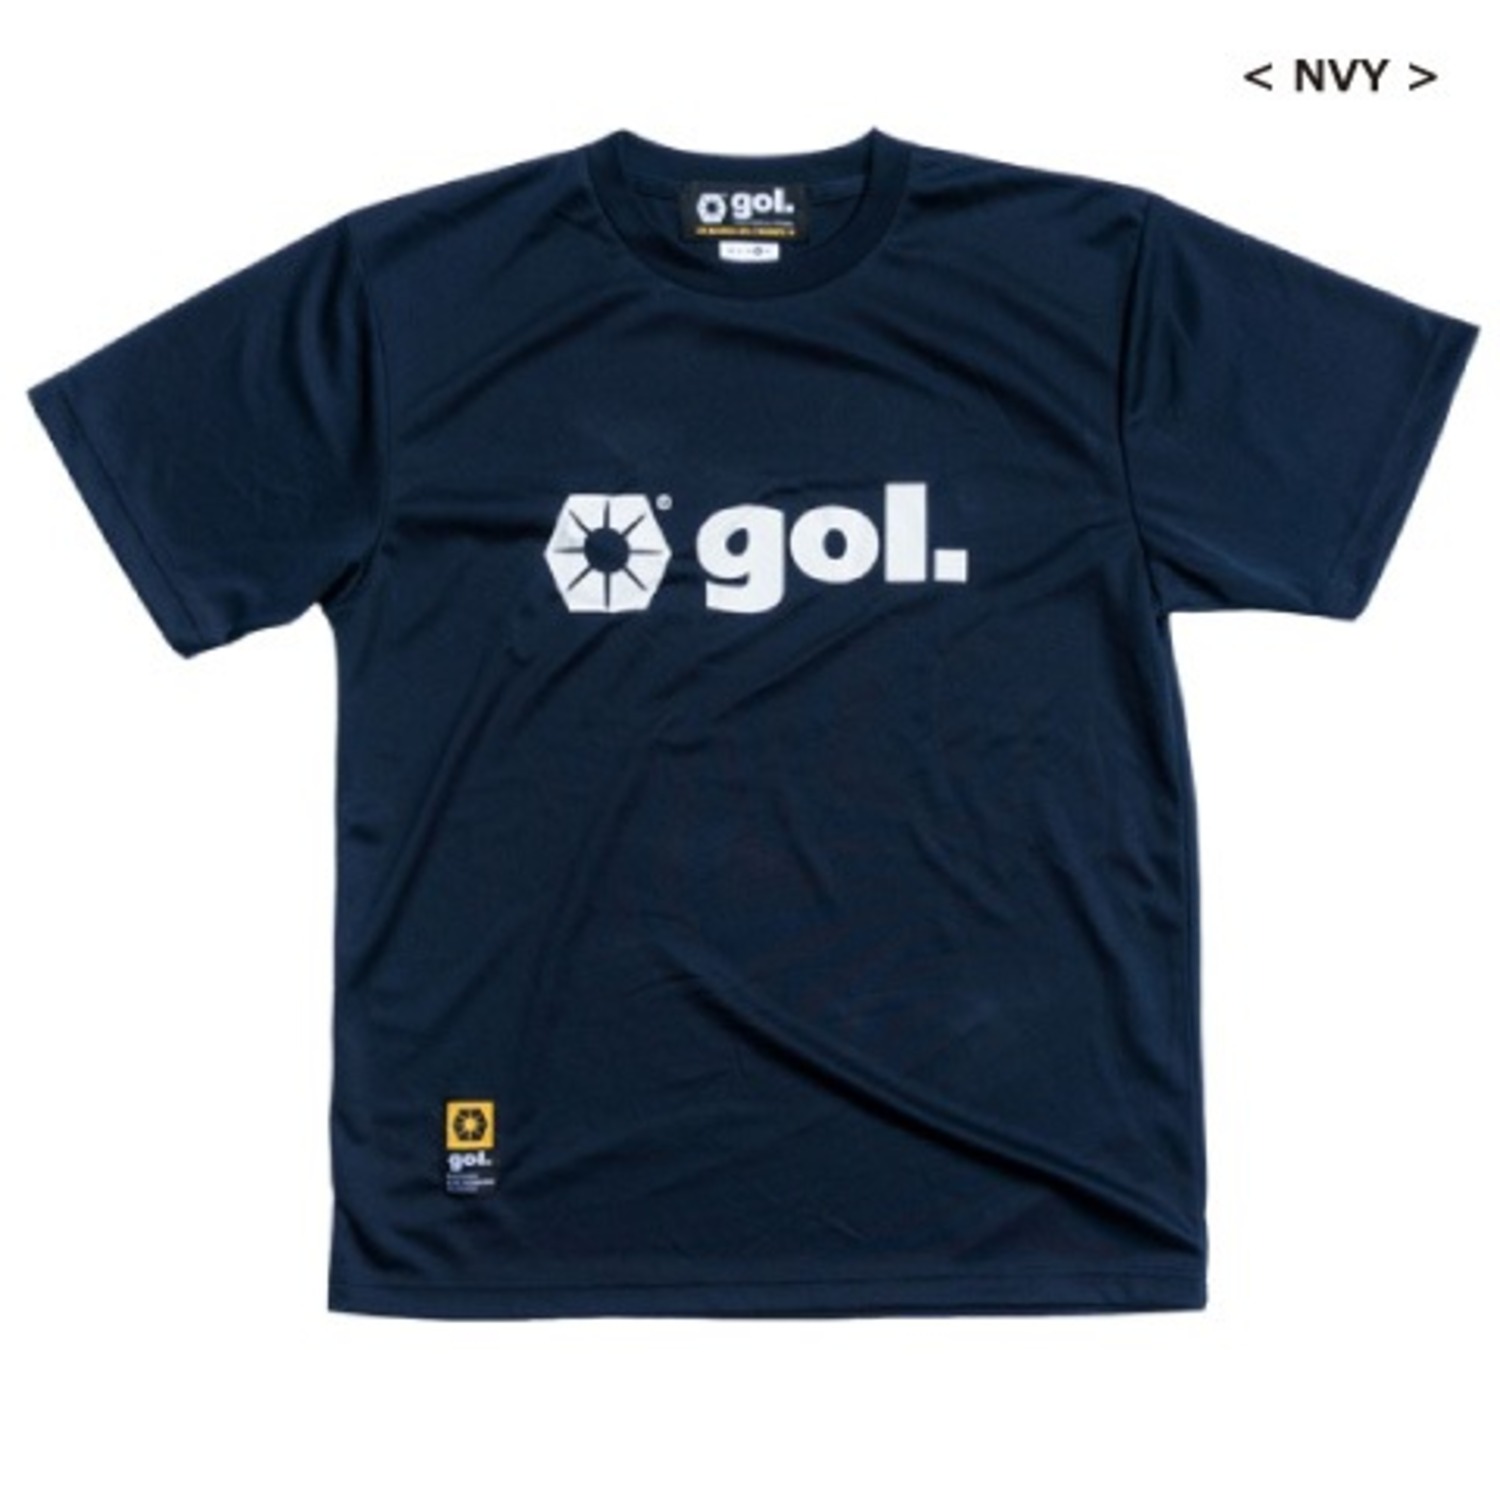 【TEAM ORDER対応】[gol./ゴル] ベーシックドライTシャツ